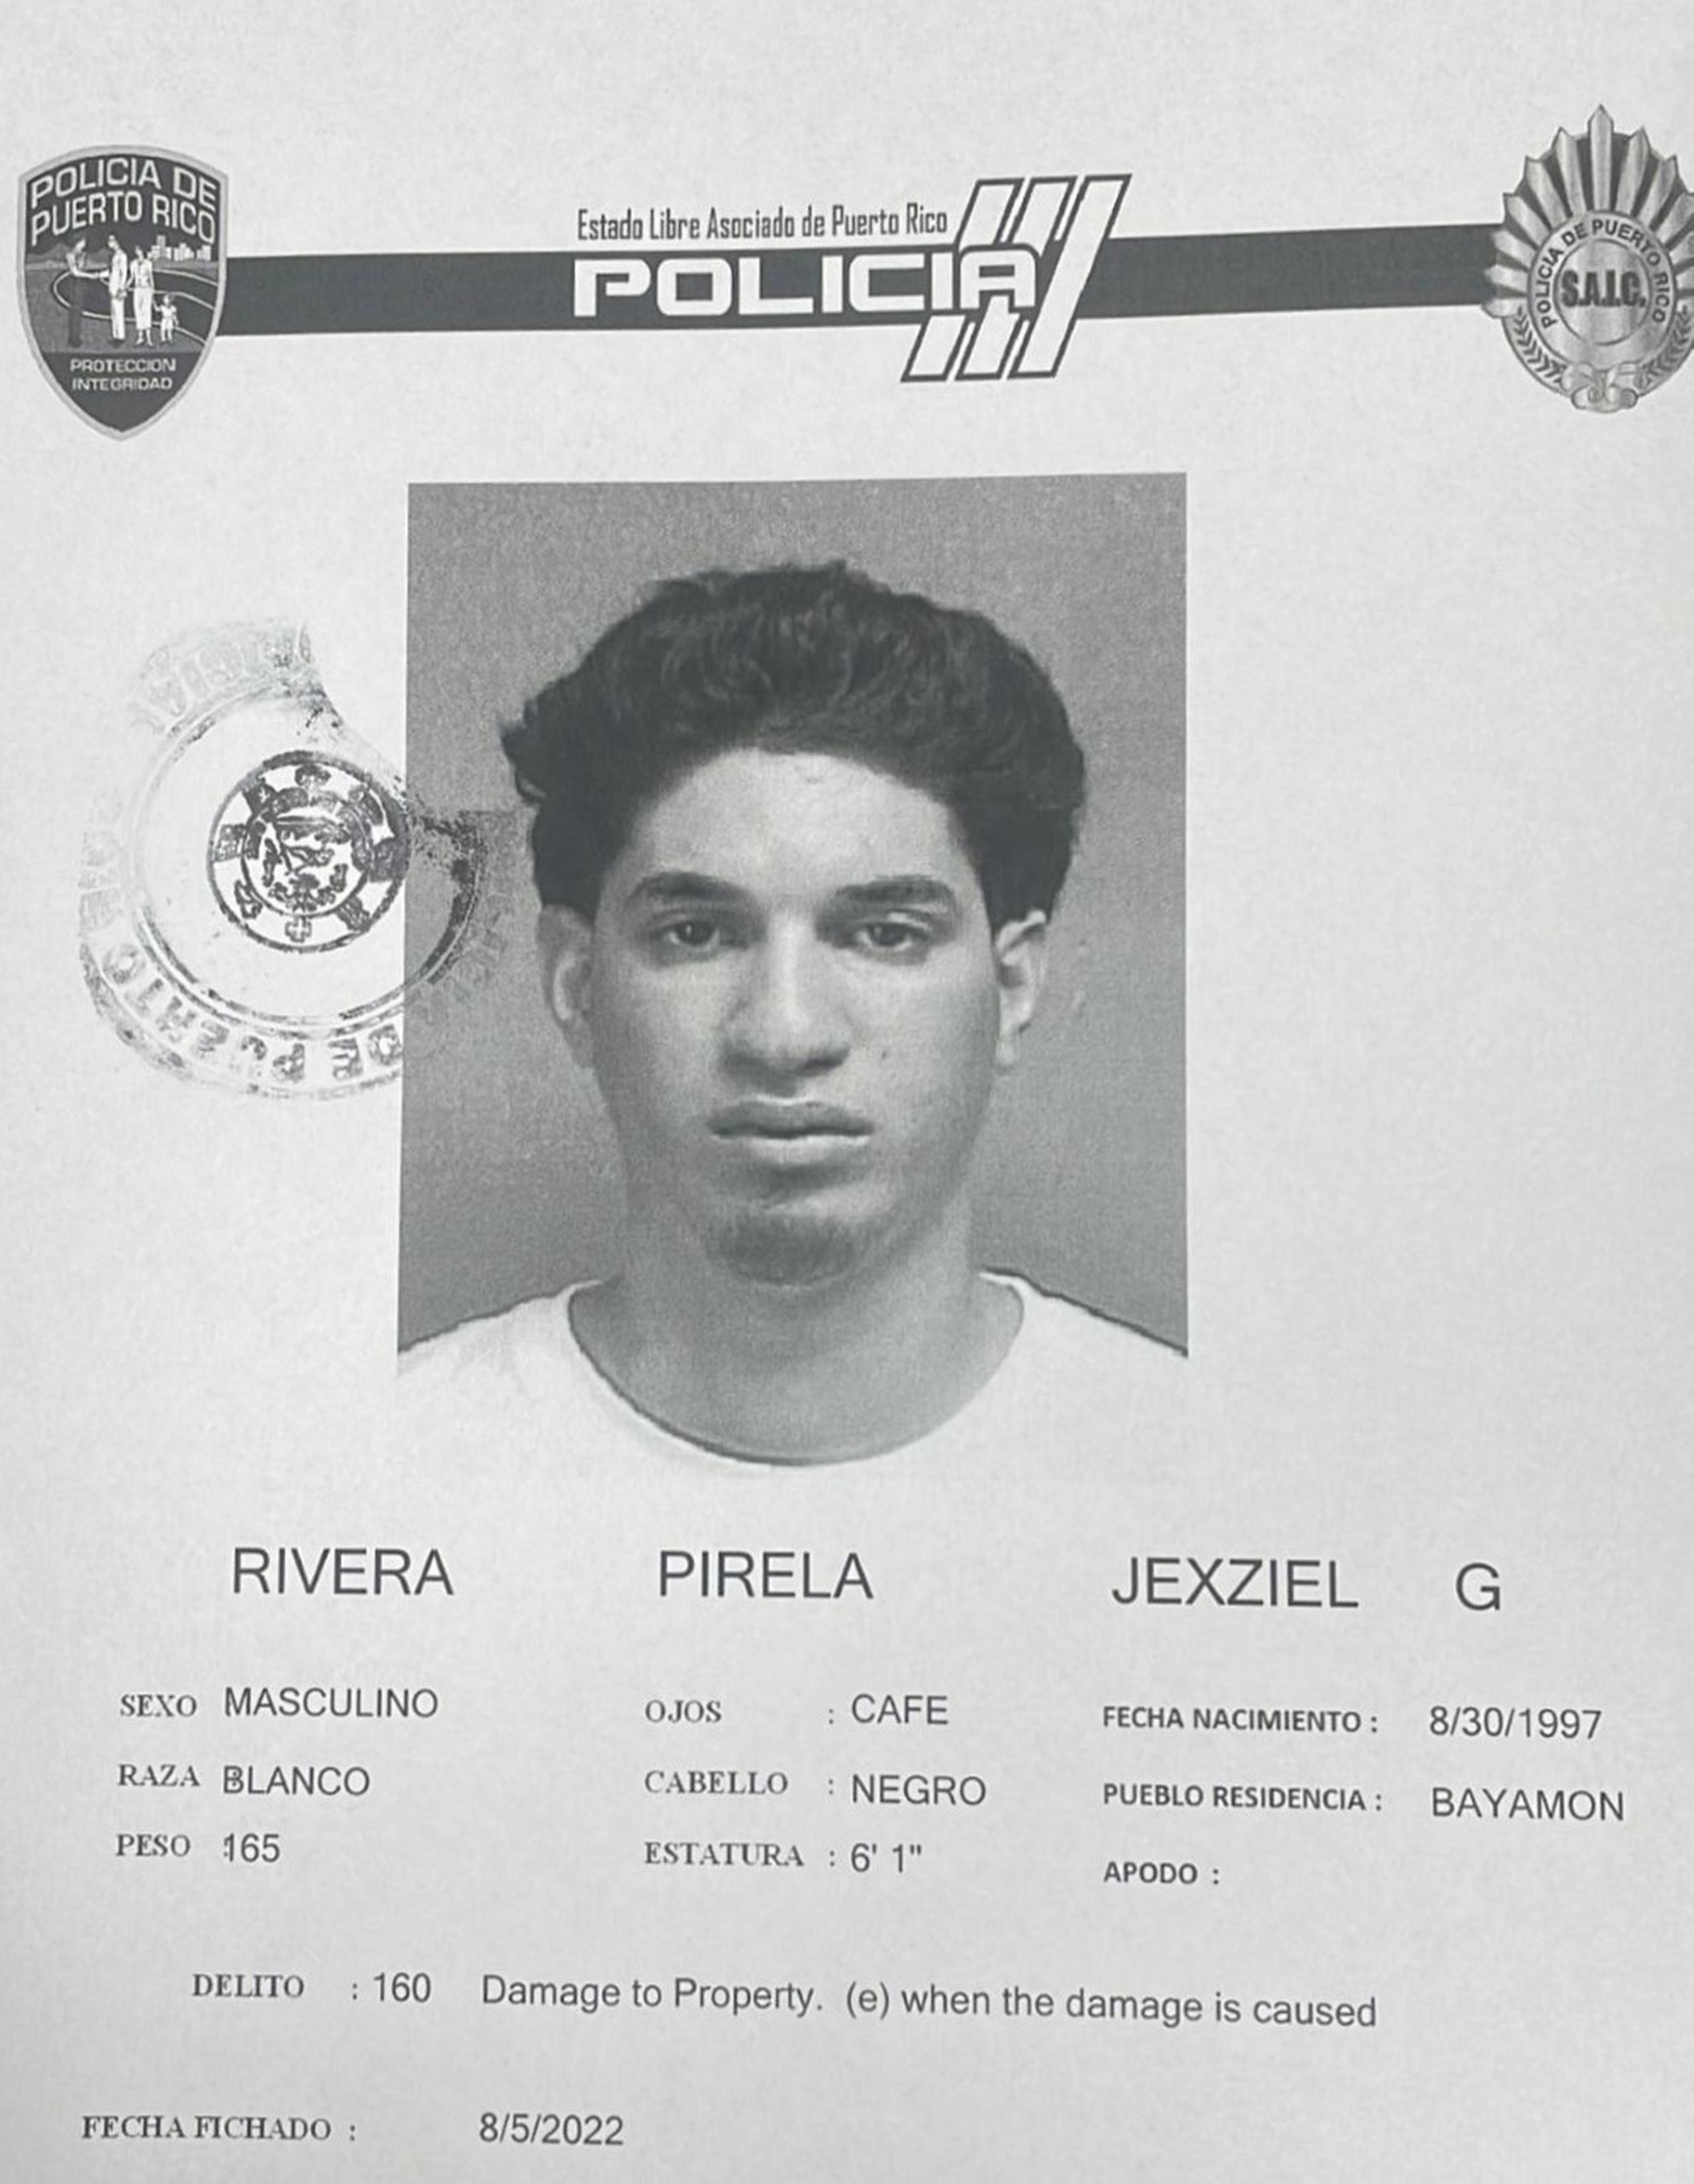 Jexziel G. Rivera Rivera